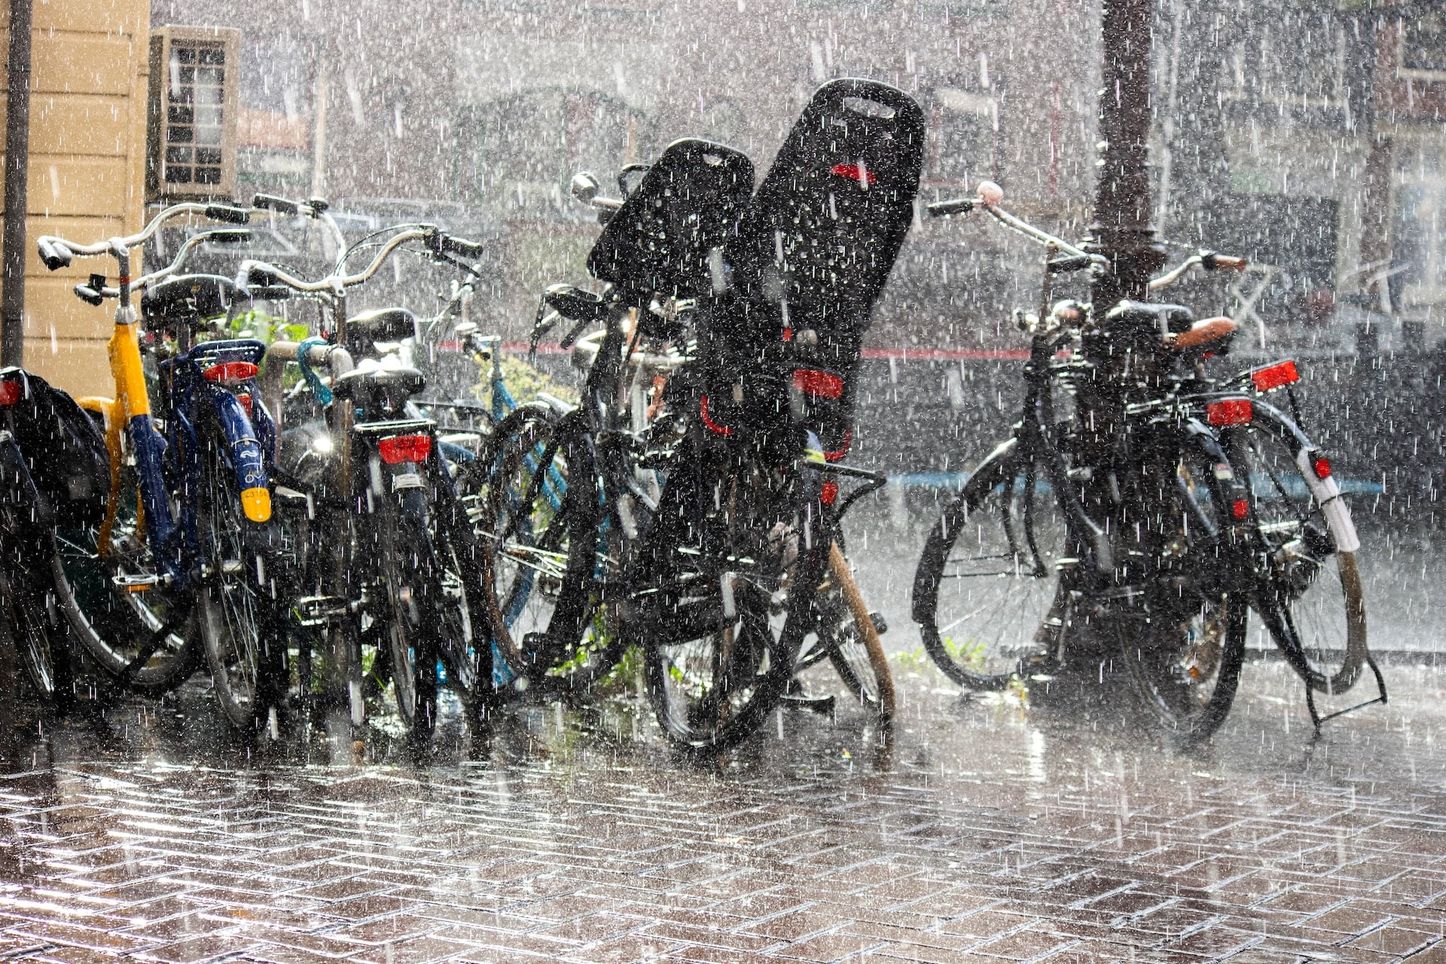 Bikes parking in the rain